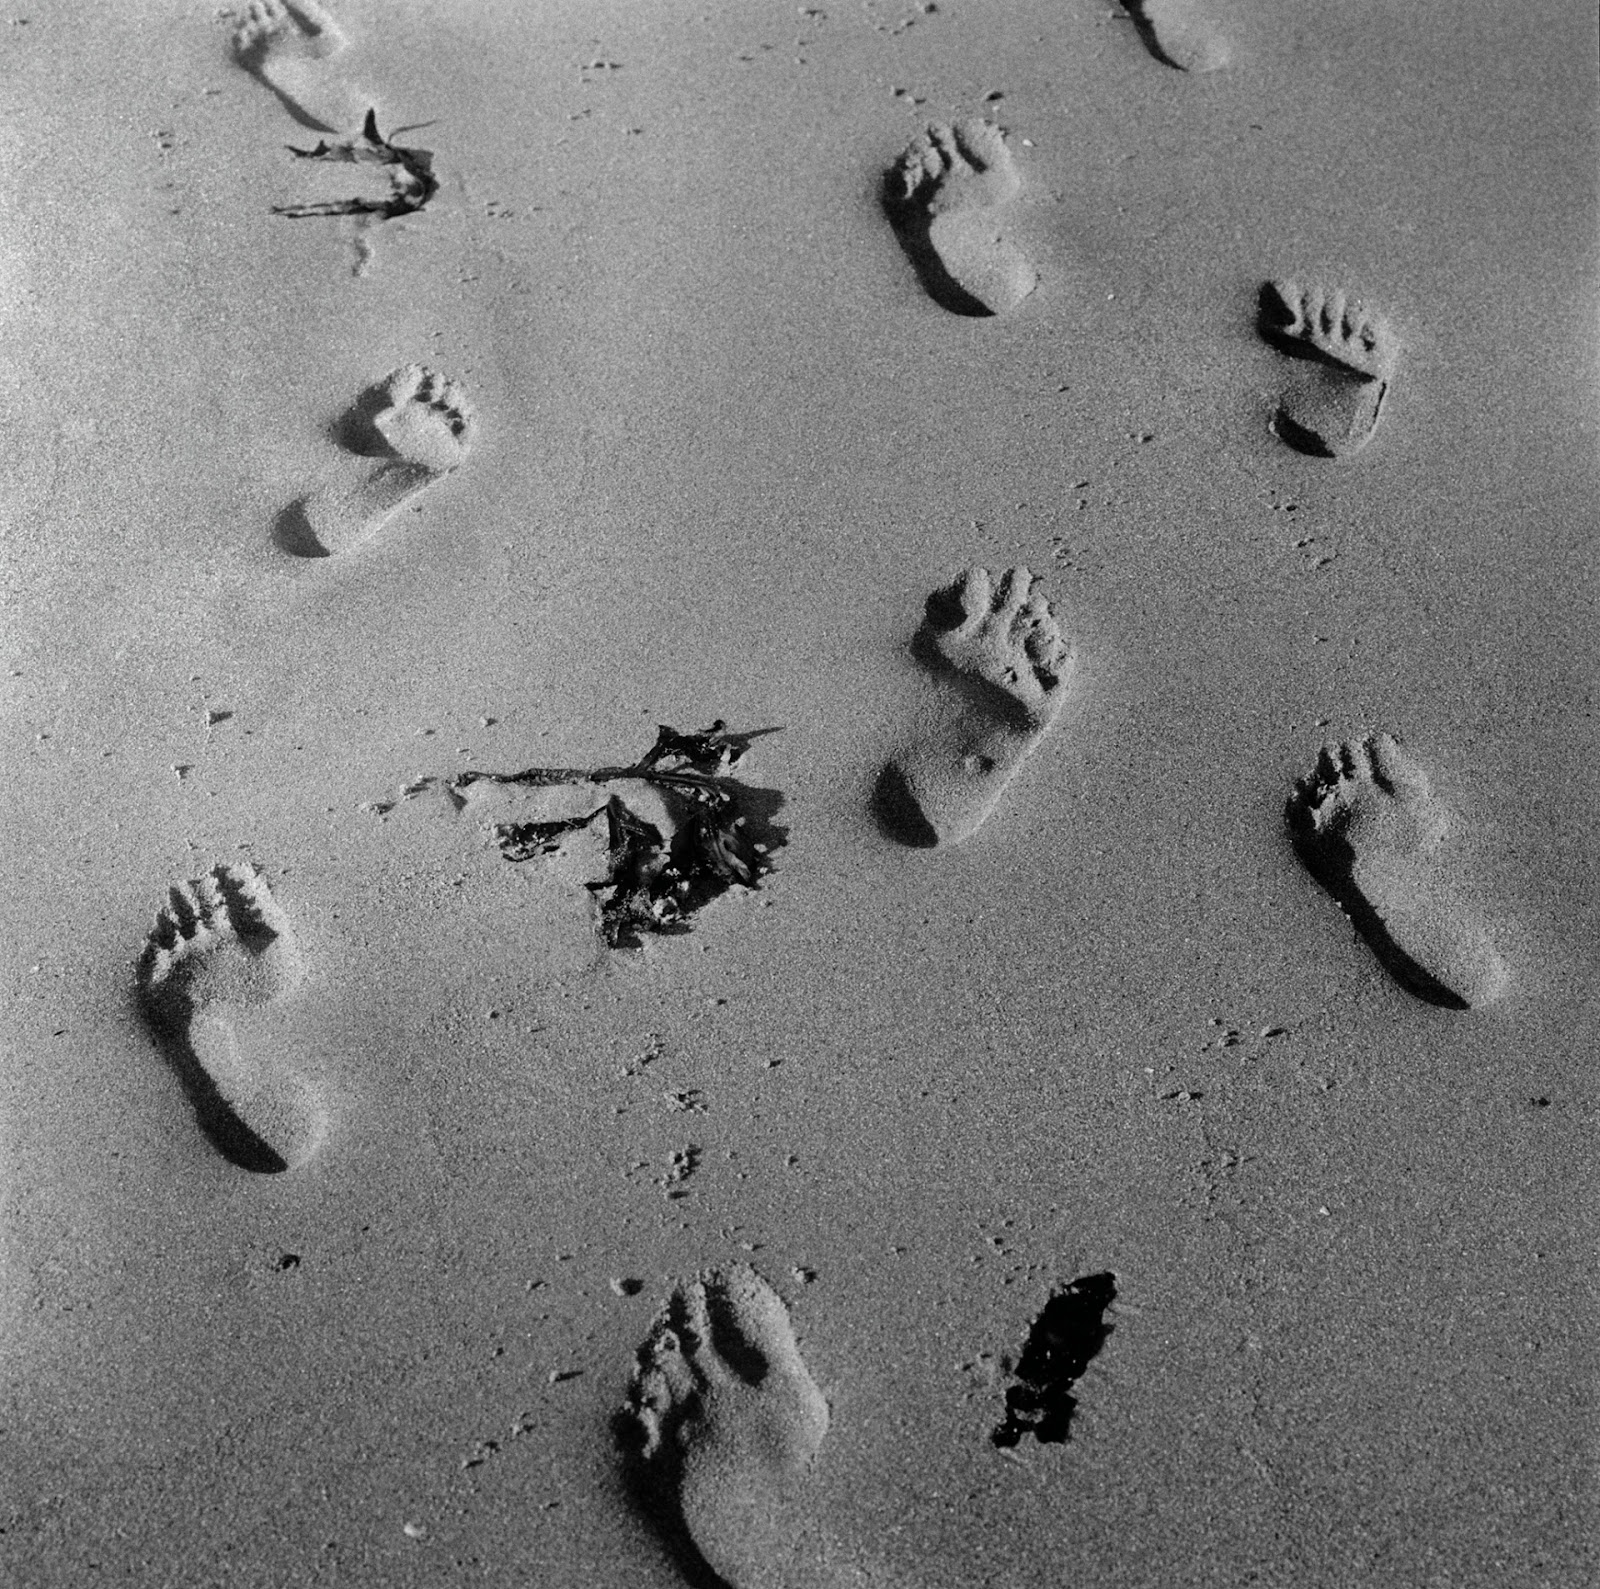 Photograph, Stuart Franklin: Northumberland. Footprints on Newton Beach. 2004.